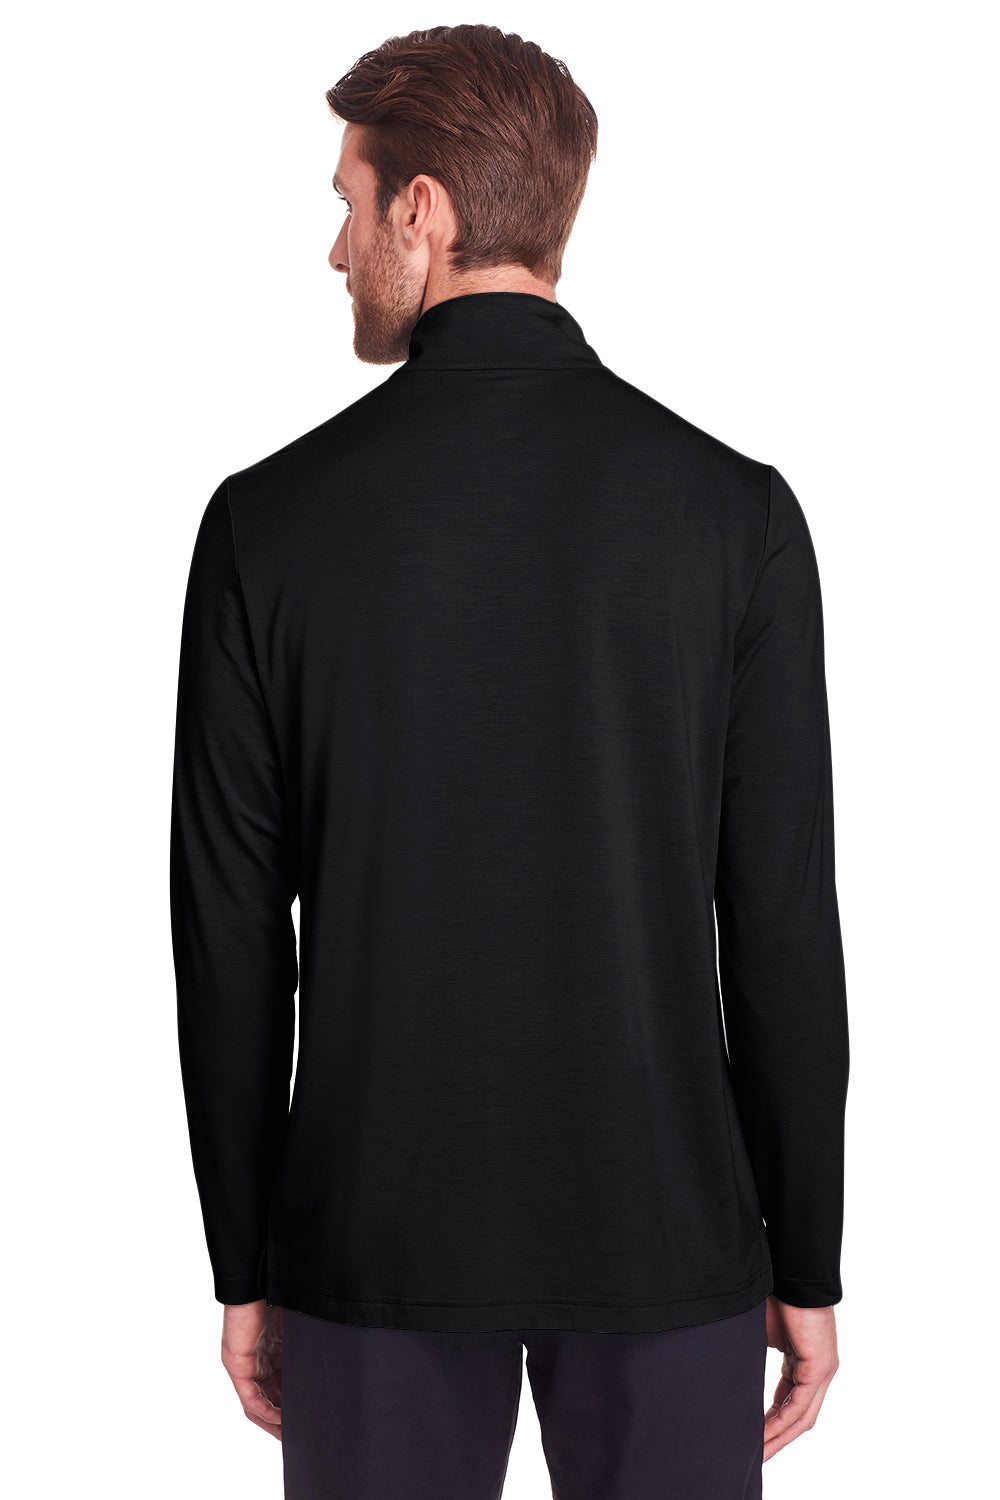 North End NE400 Mens Jaq Performance Moisture Wicking Long Sleeve Polo Shirt Black Back